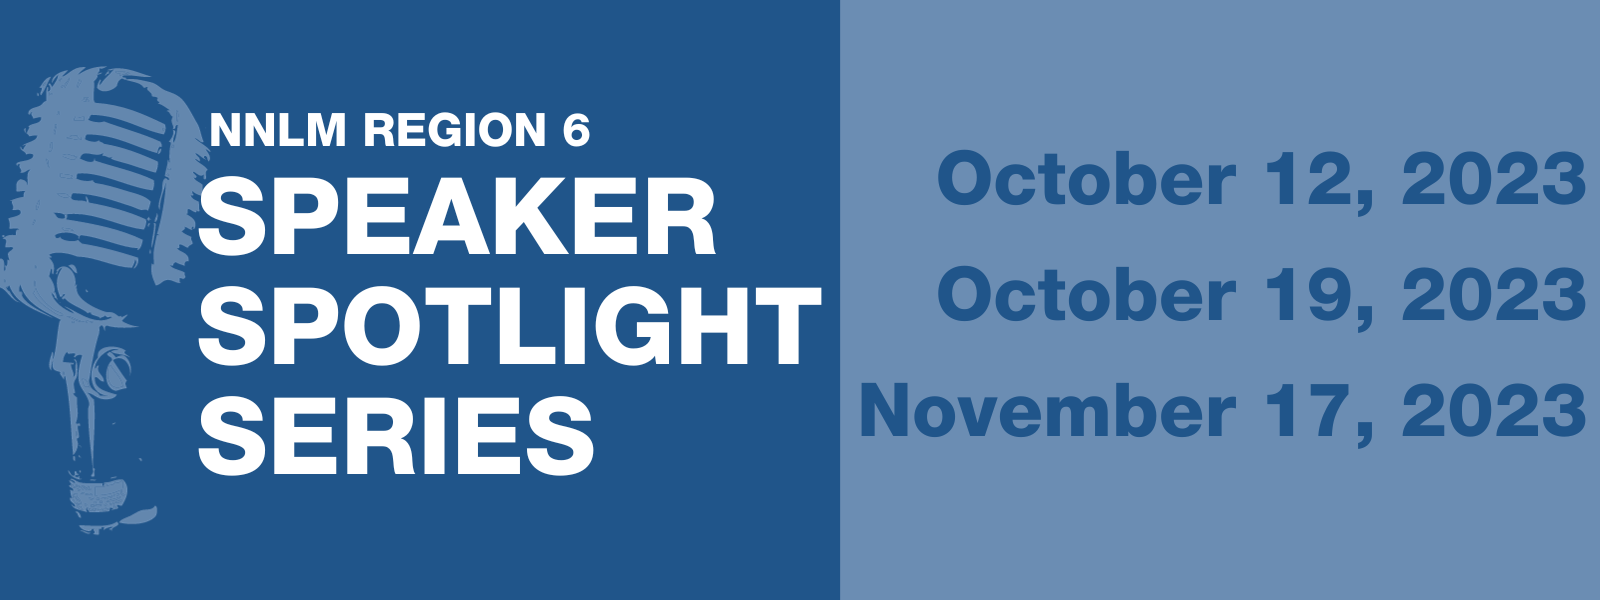 Fall Speaker Spotlight Series Dates